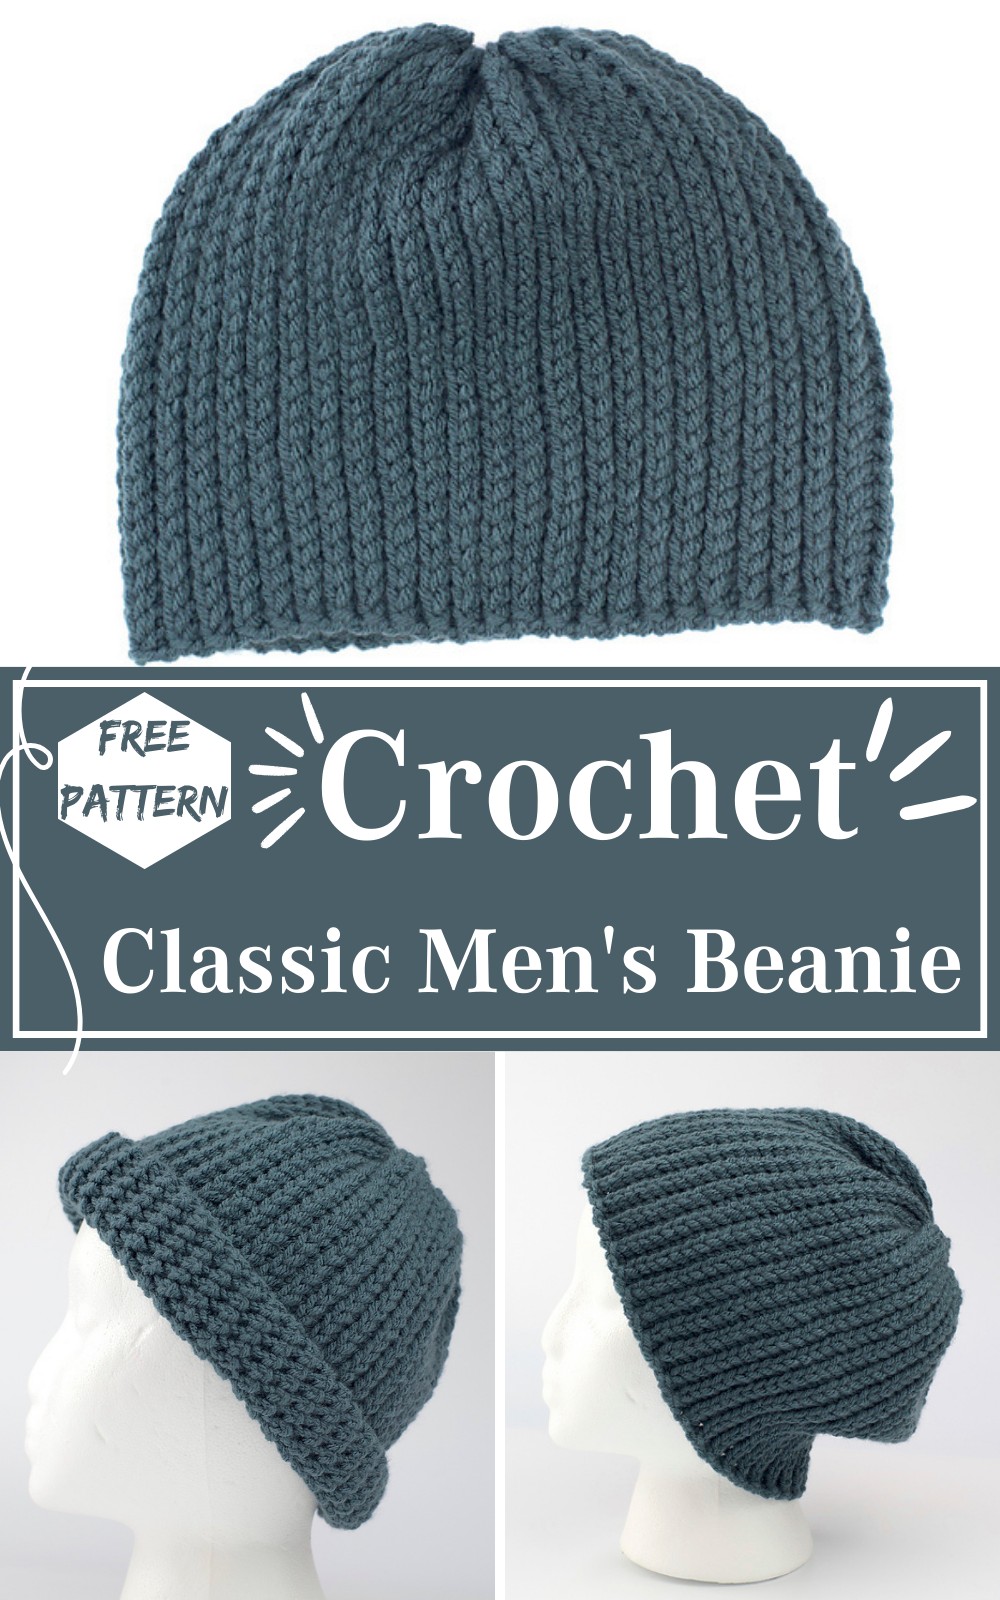 Crochet Classic Men's Beanie